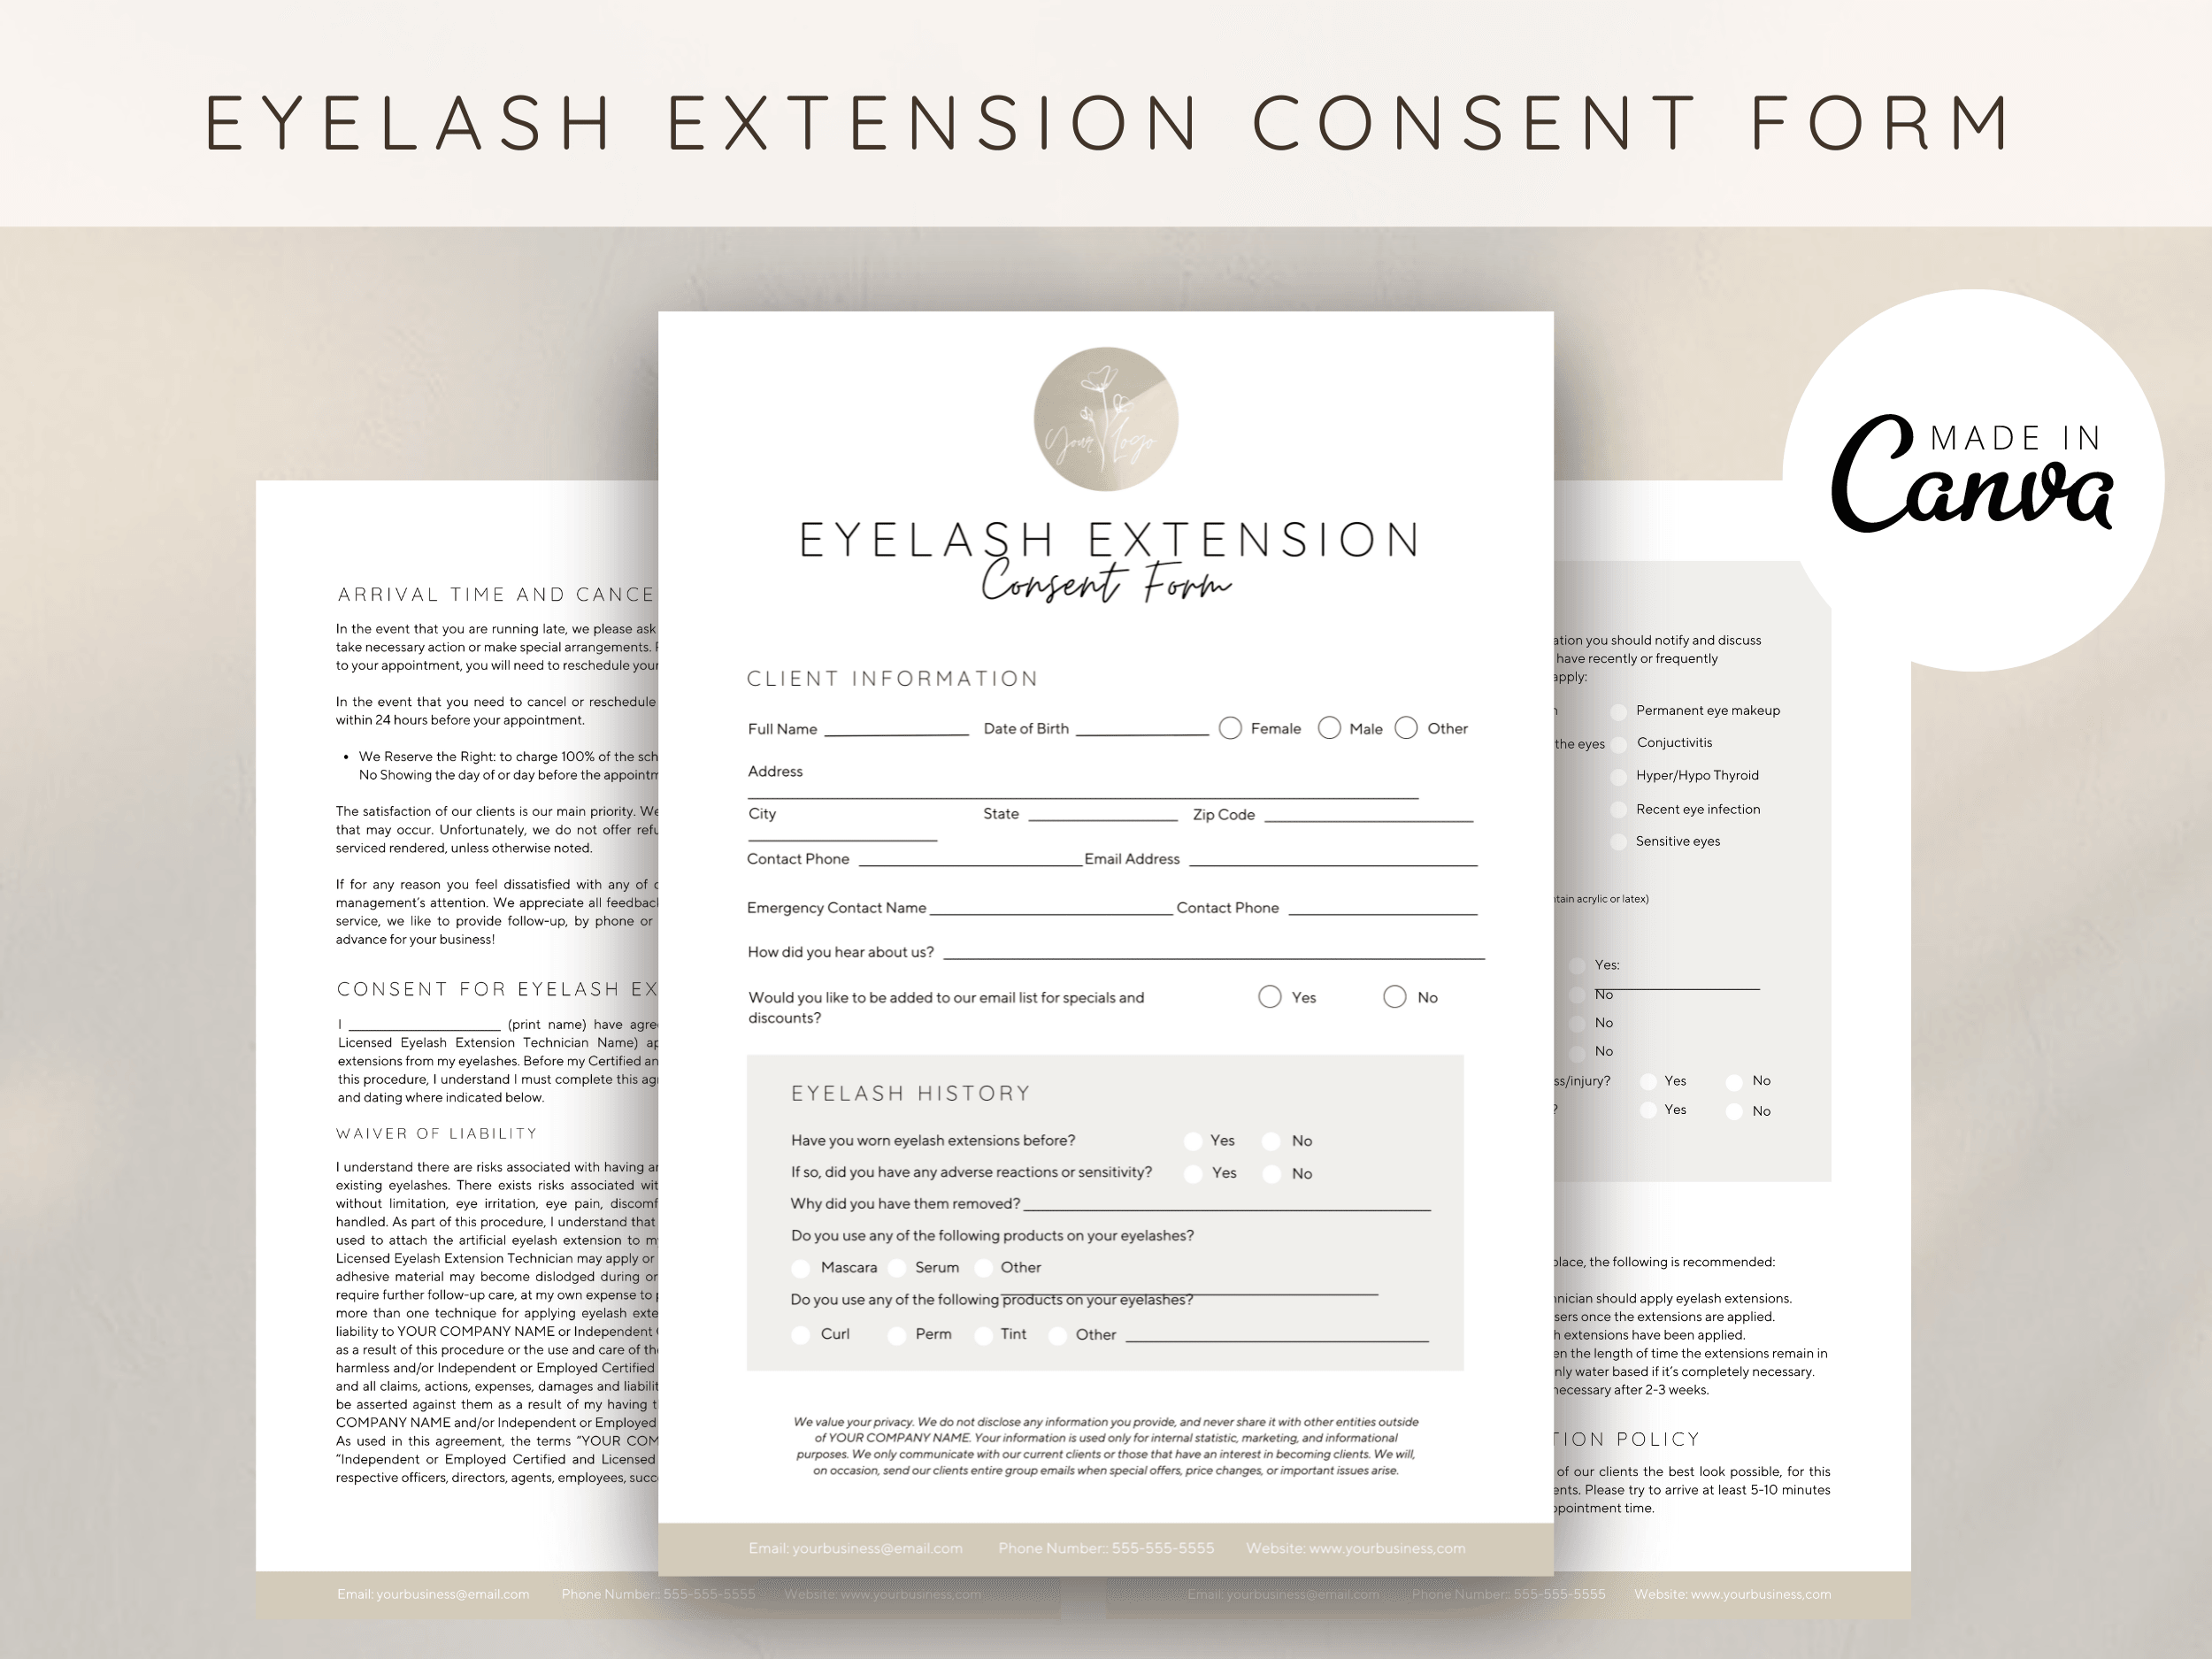 Eyelash Extension Consent Form Editable Canva template - Un-Stripped